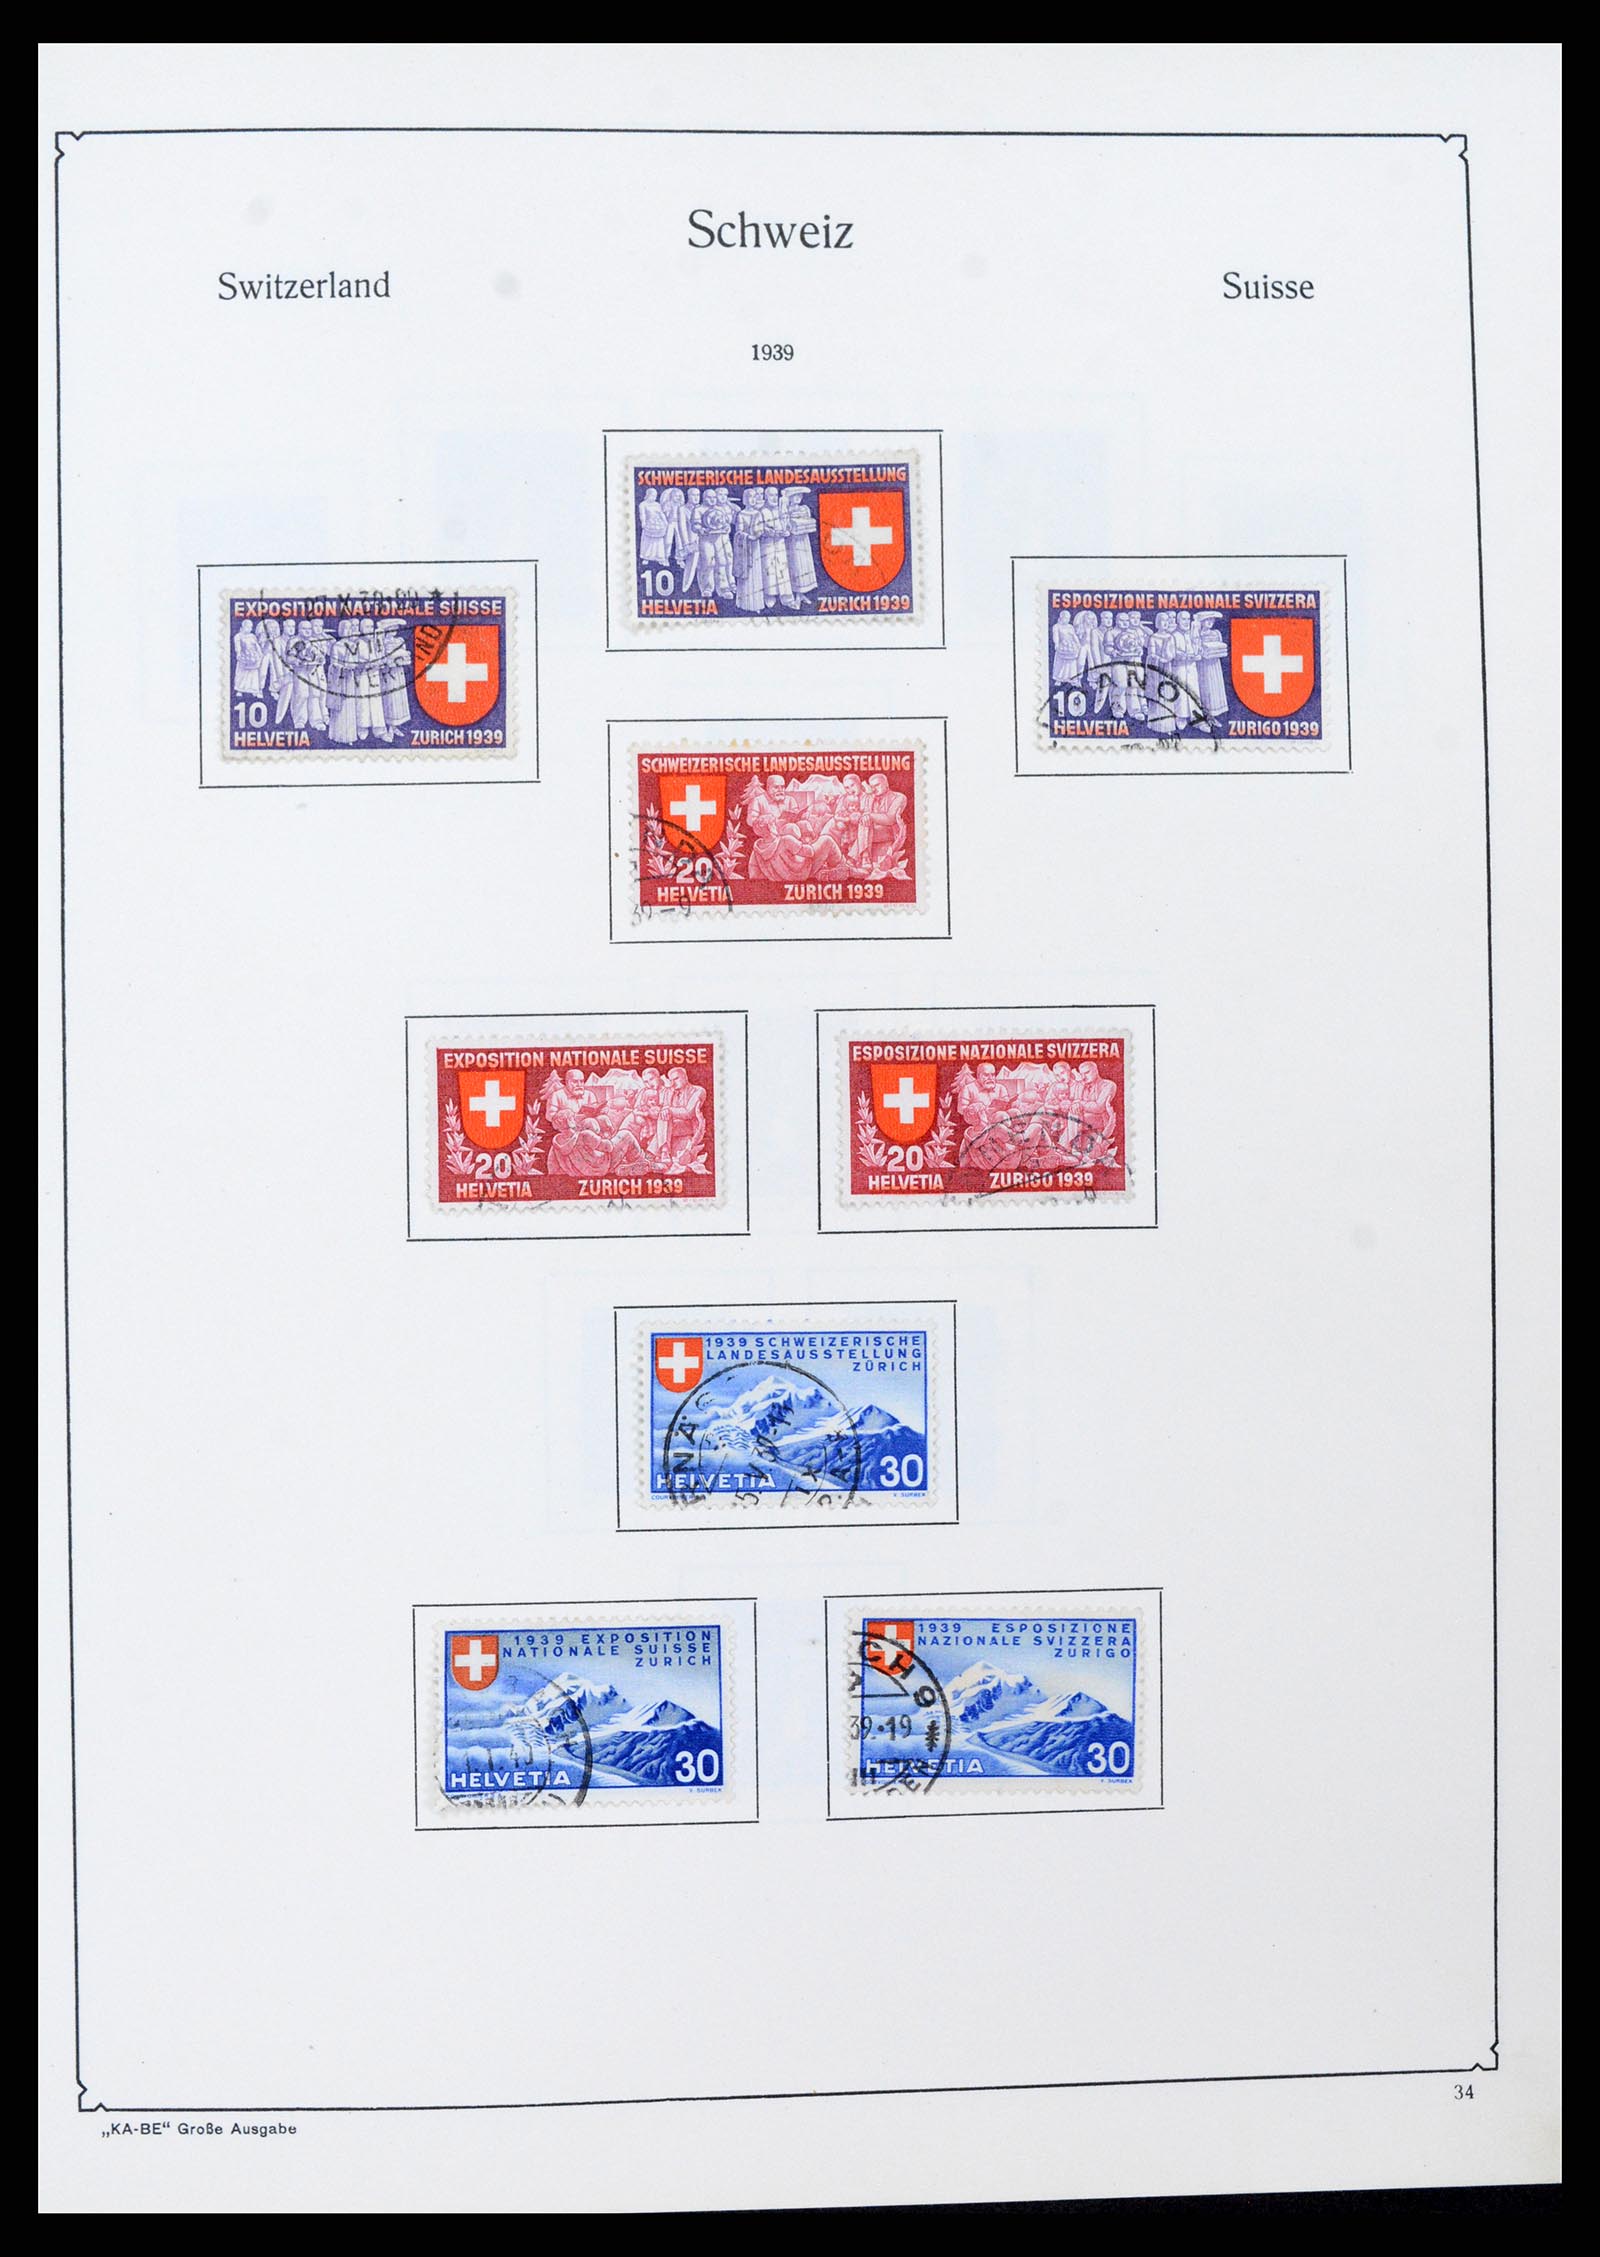 37588 033 - Stamp collection 37588 Switzerland 1854-1974.